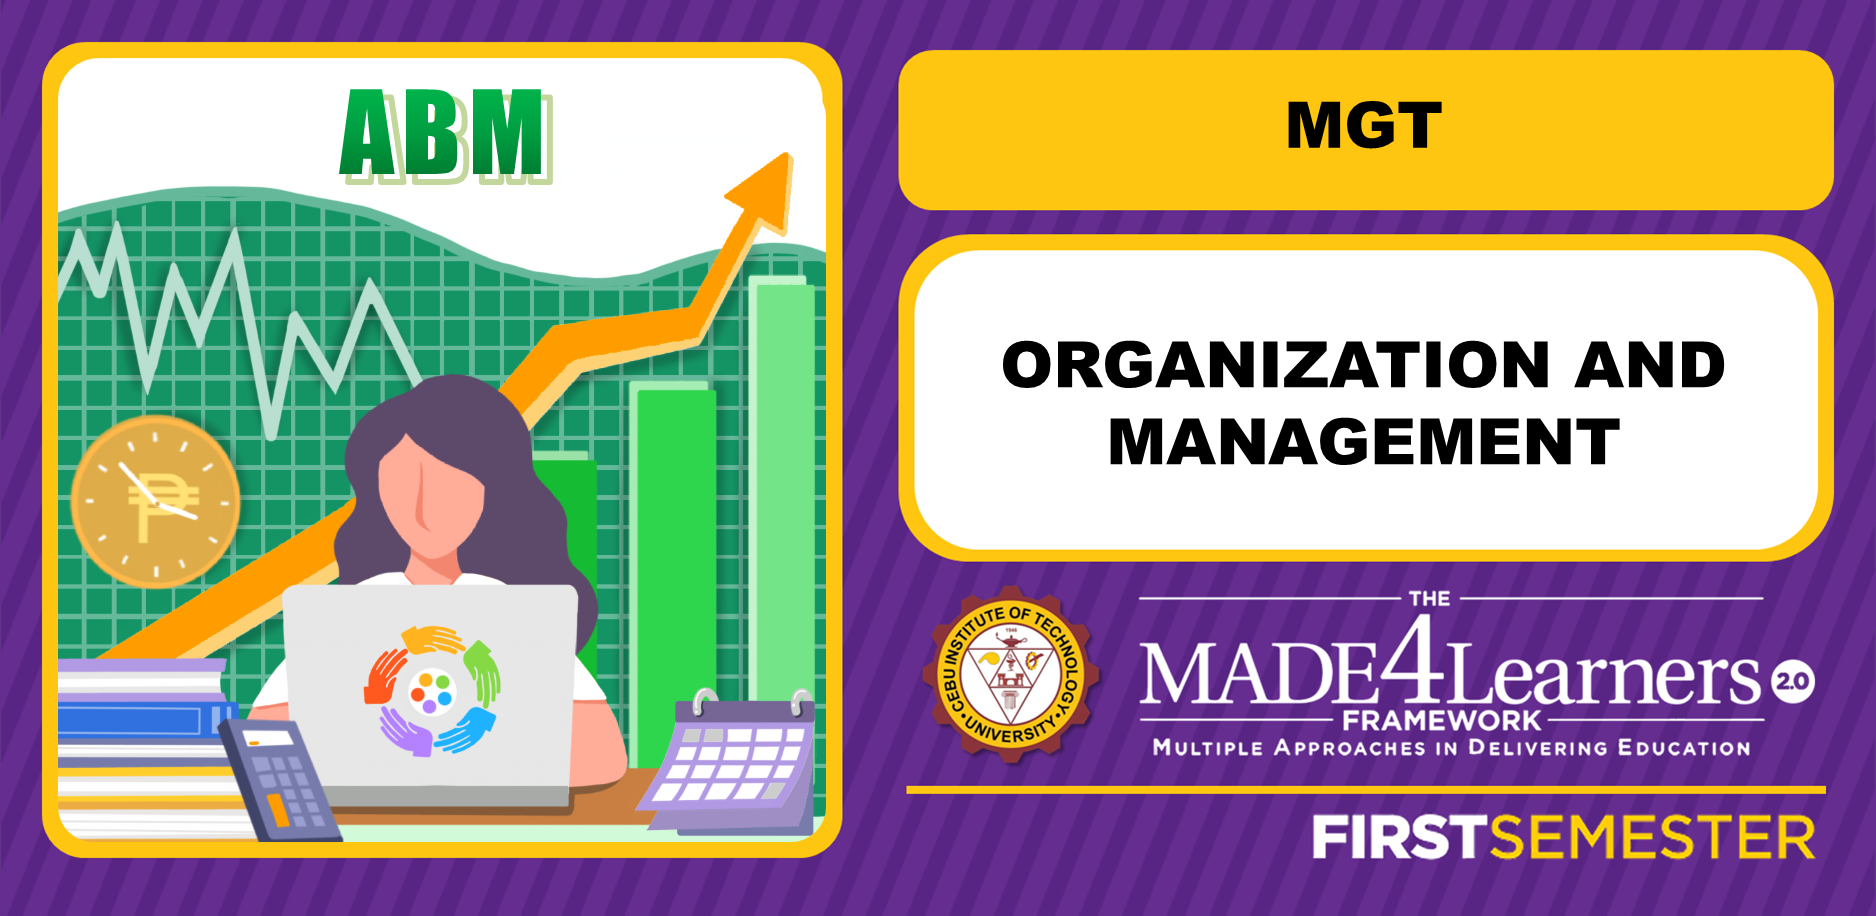 MGT: Organization and Management (Calo)